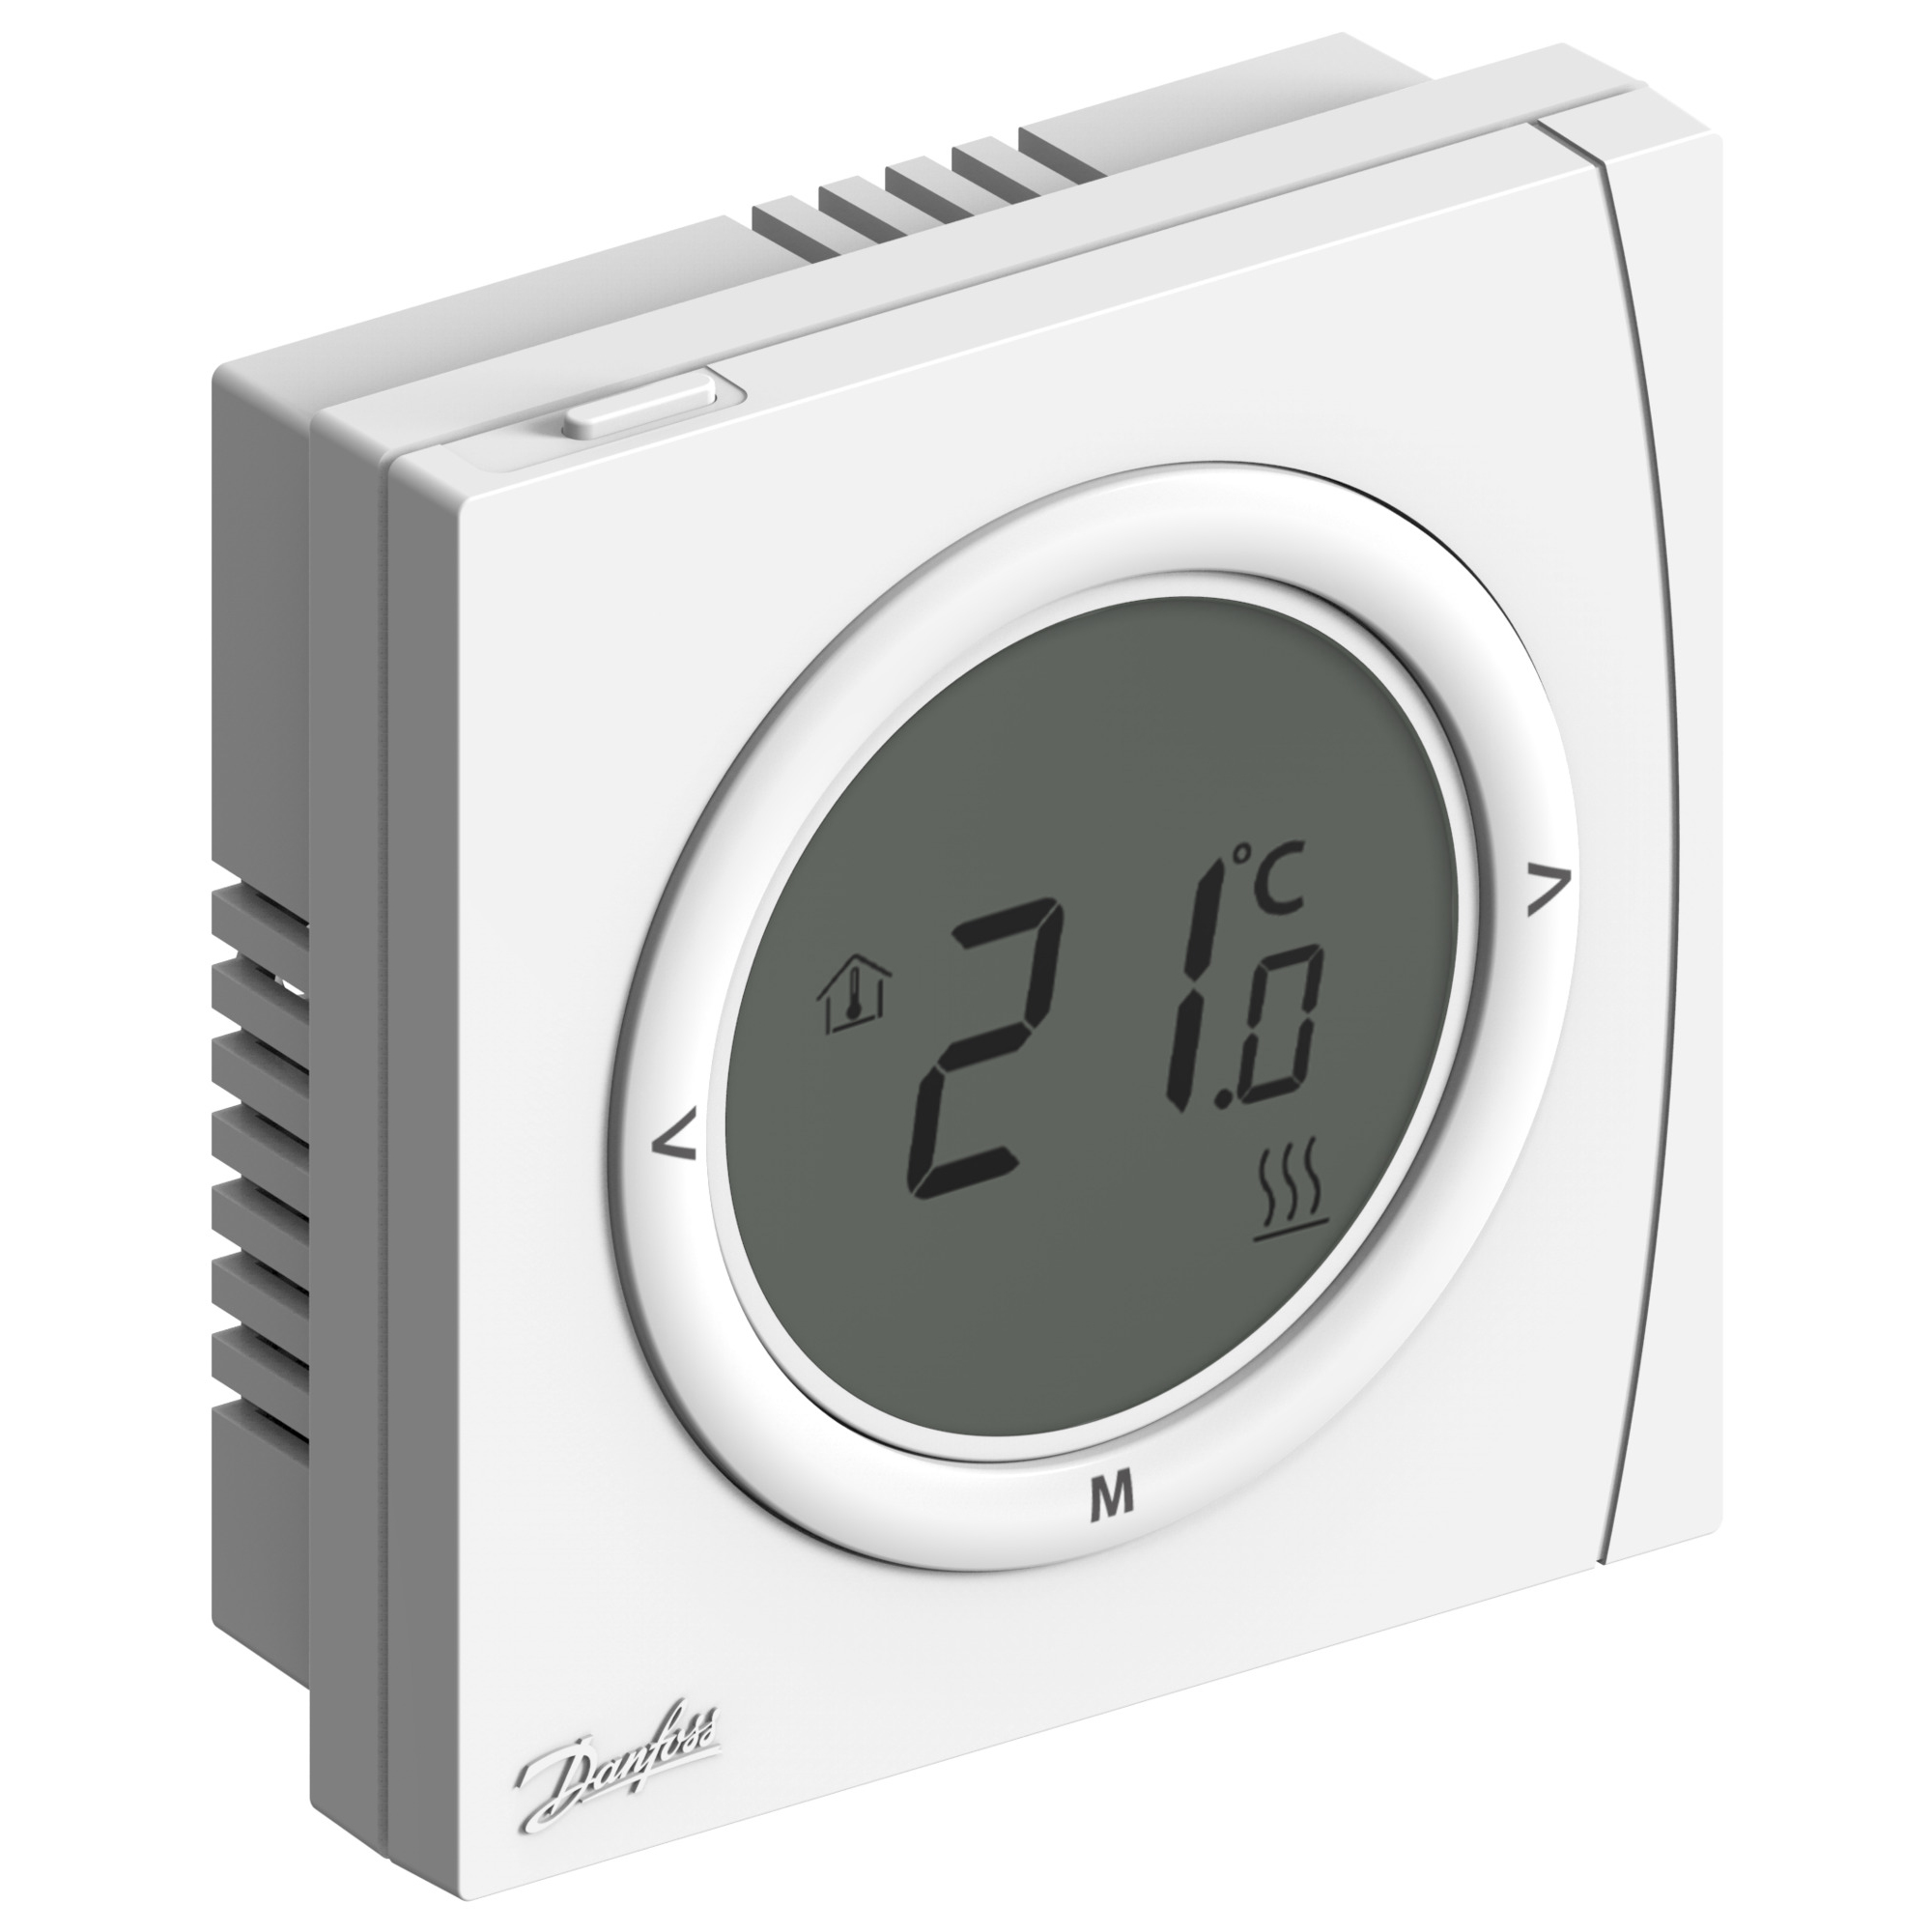 https://www.heatandplumb.com/images/products/o/danfoss-ret-heating-control-464167.jpg